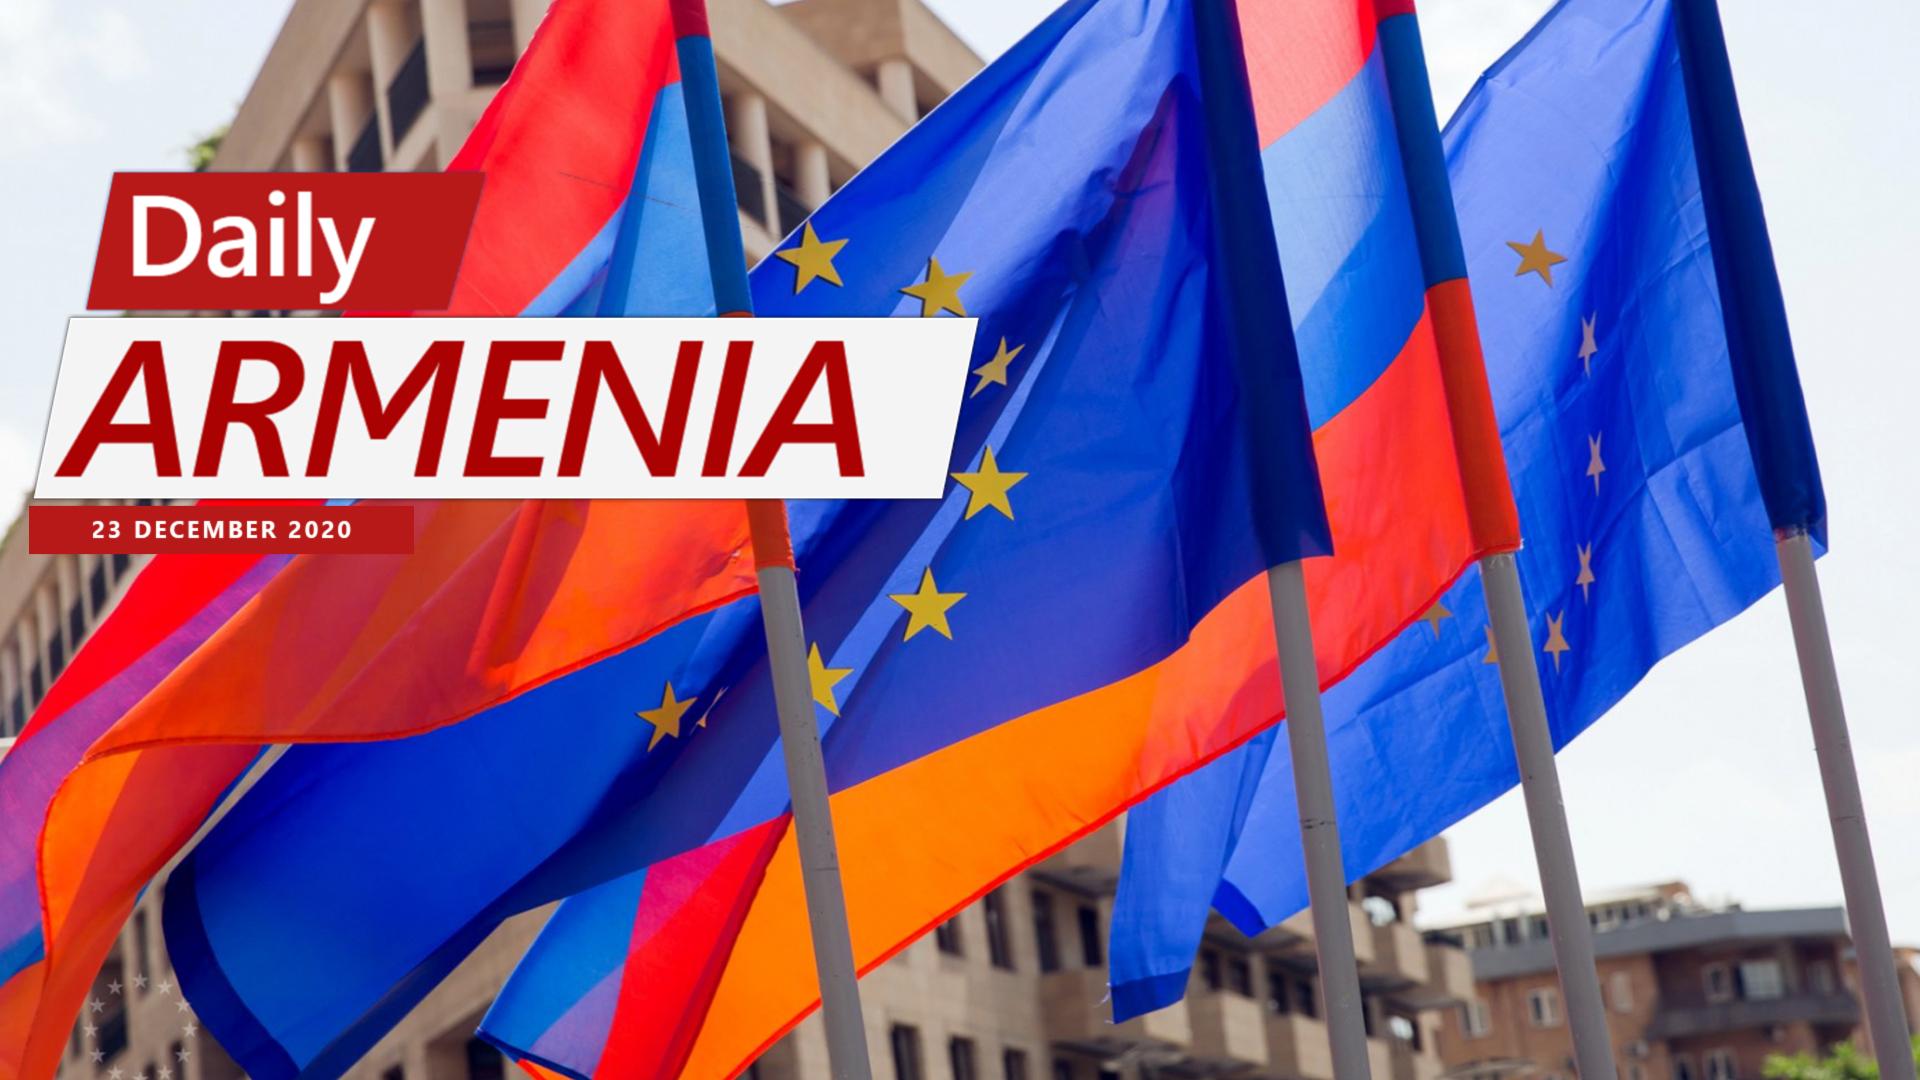 The EU to Allocate Additional $30 million to Armenia